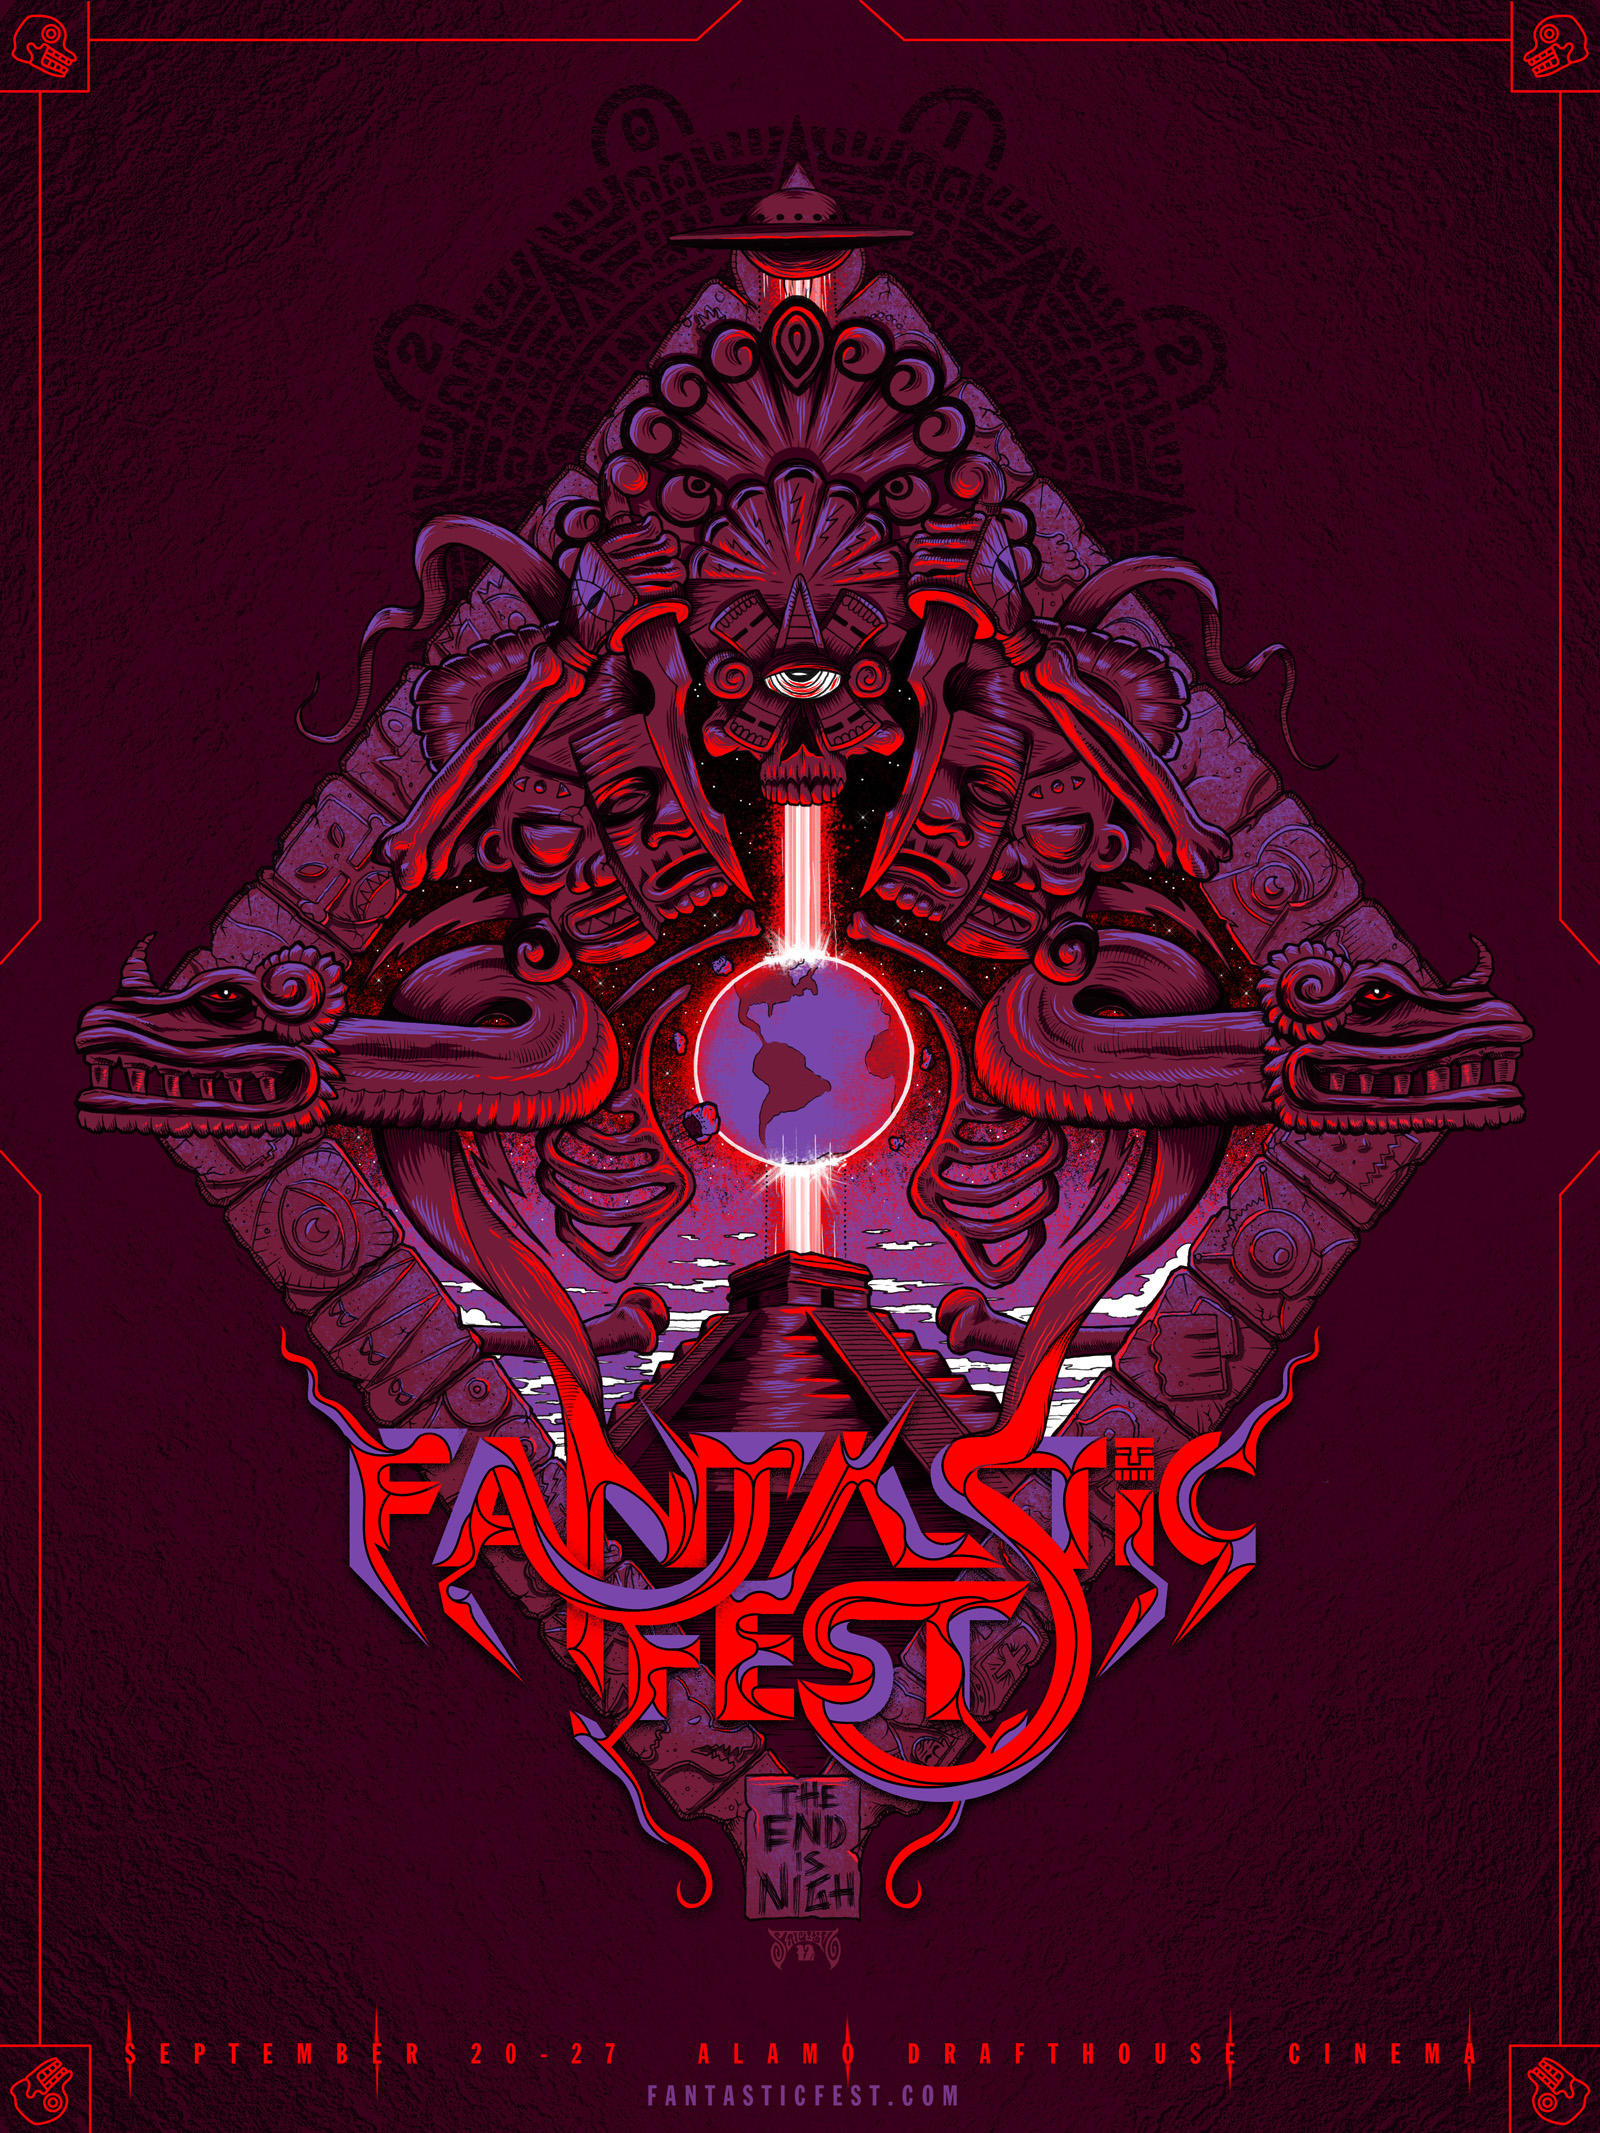 FANTASTIC FEST 2012: THE END IS JUST BEGINNING!